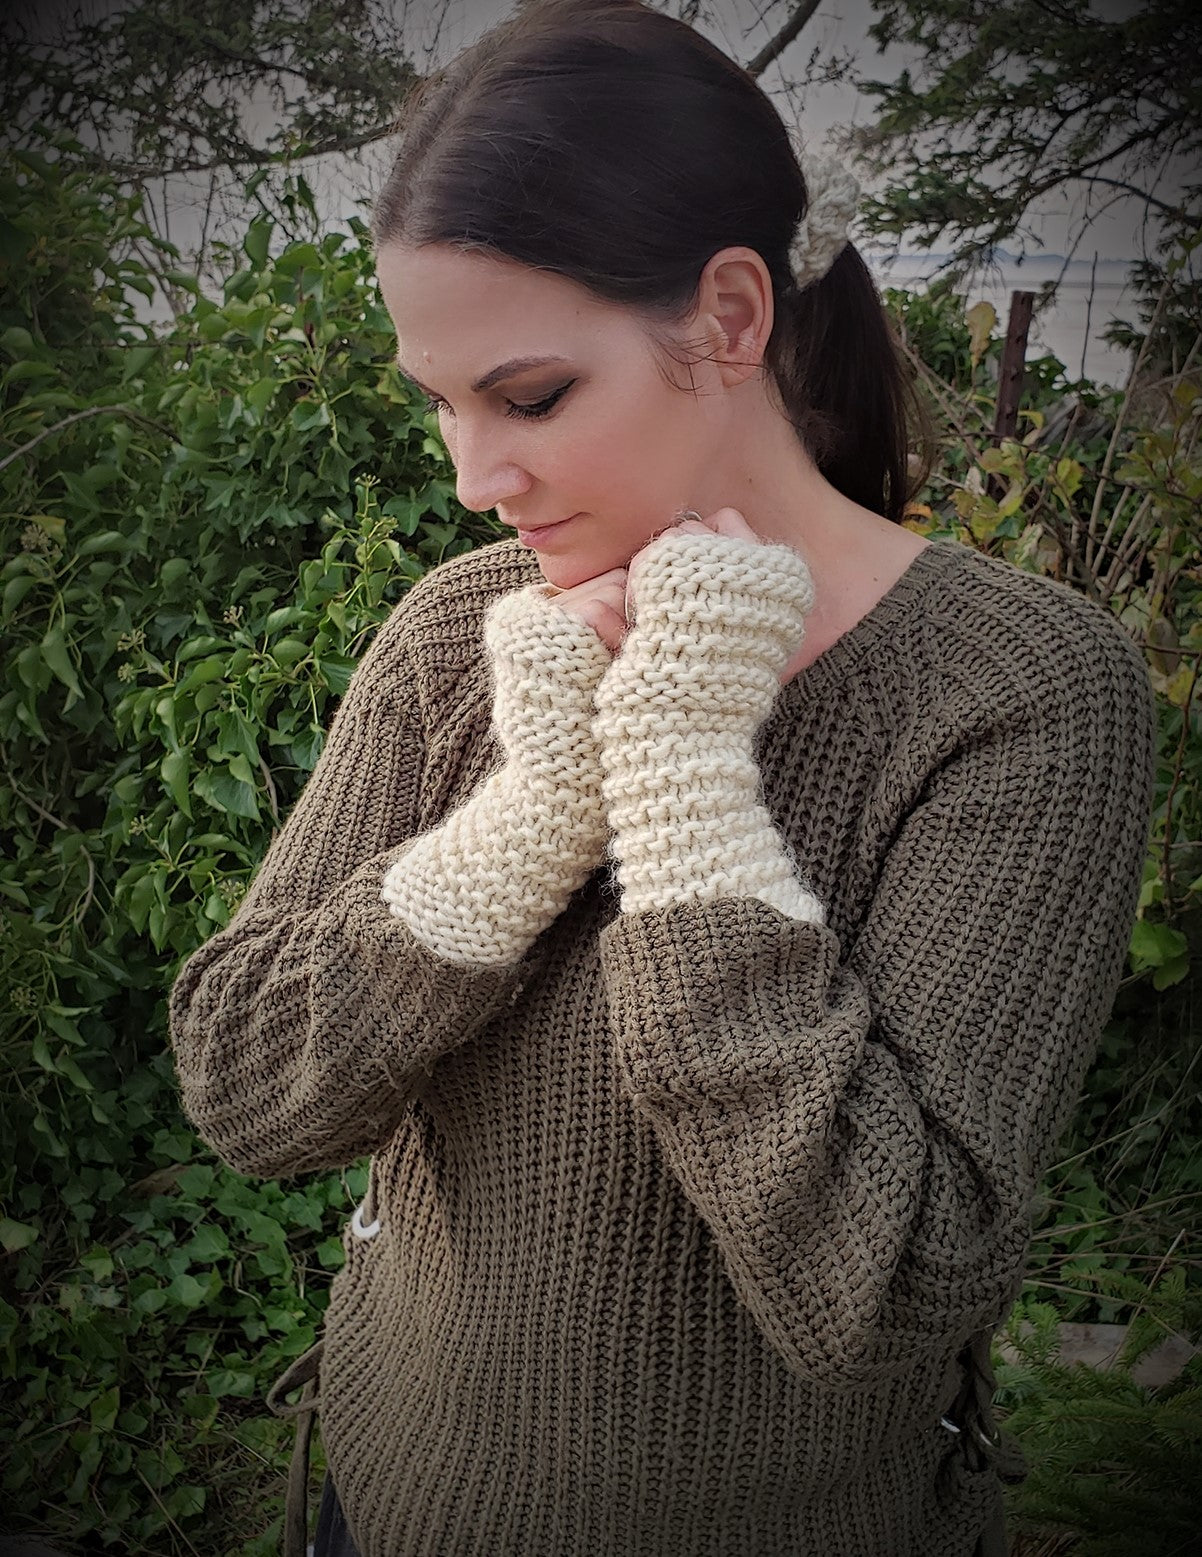 The "Fawn" Handknit Cream Fingerless Gloves